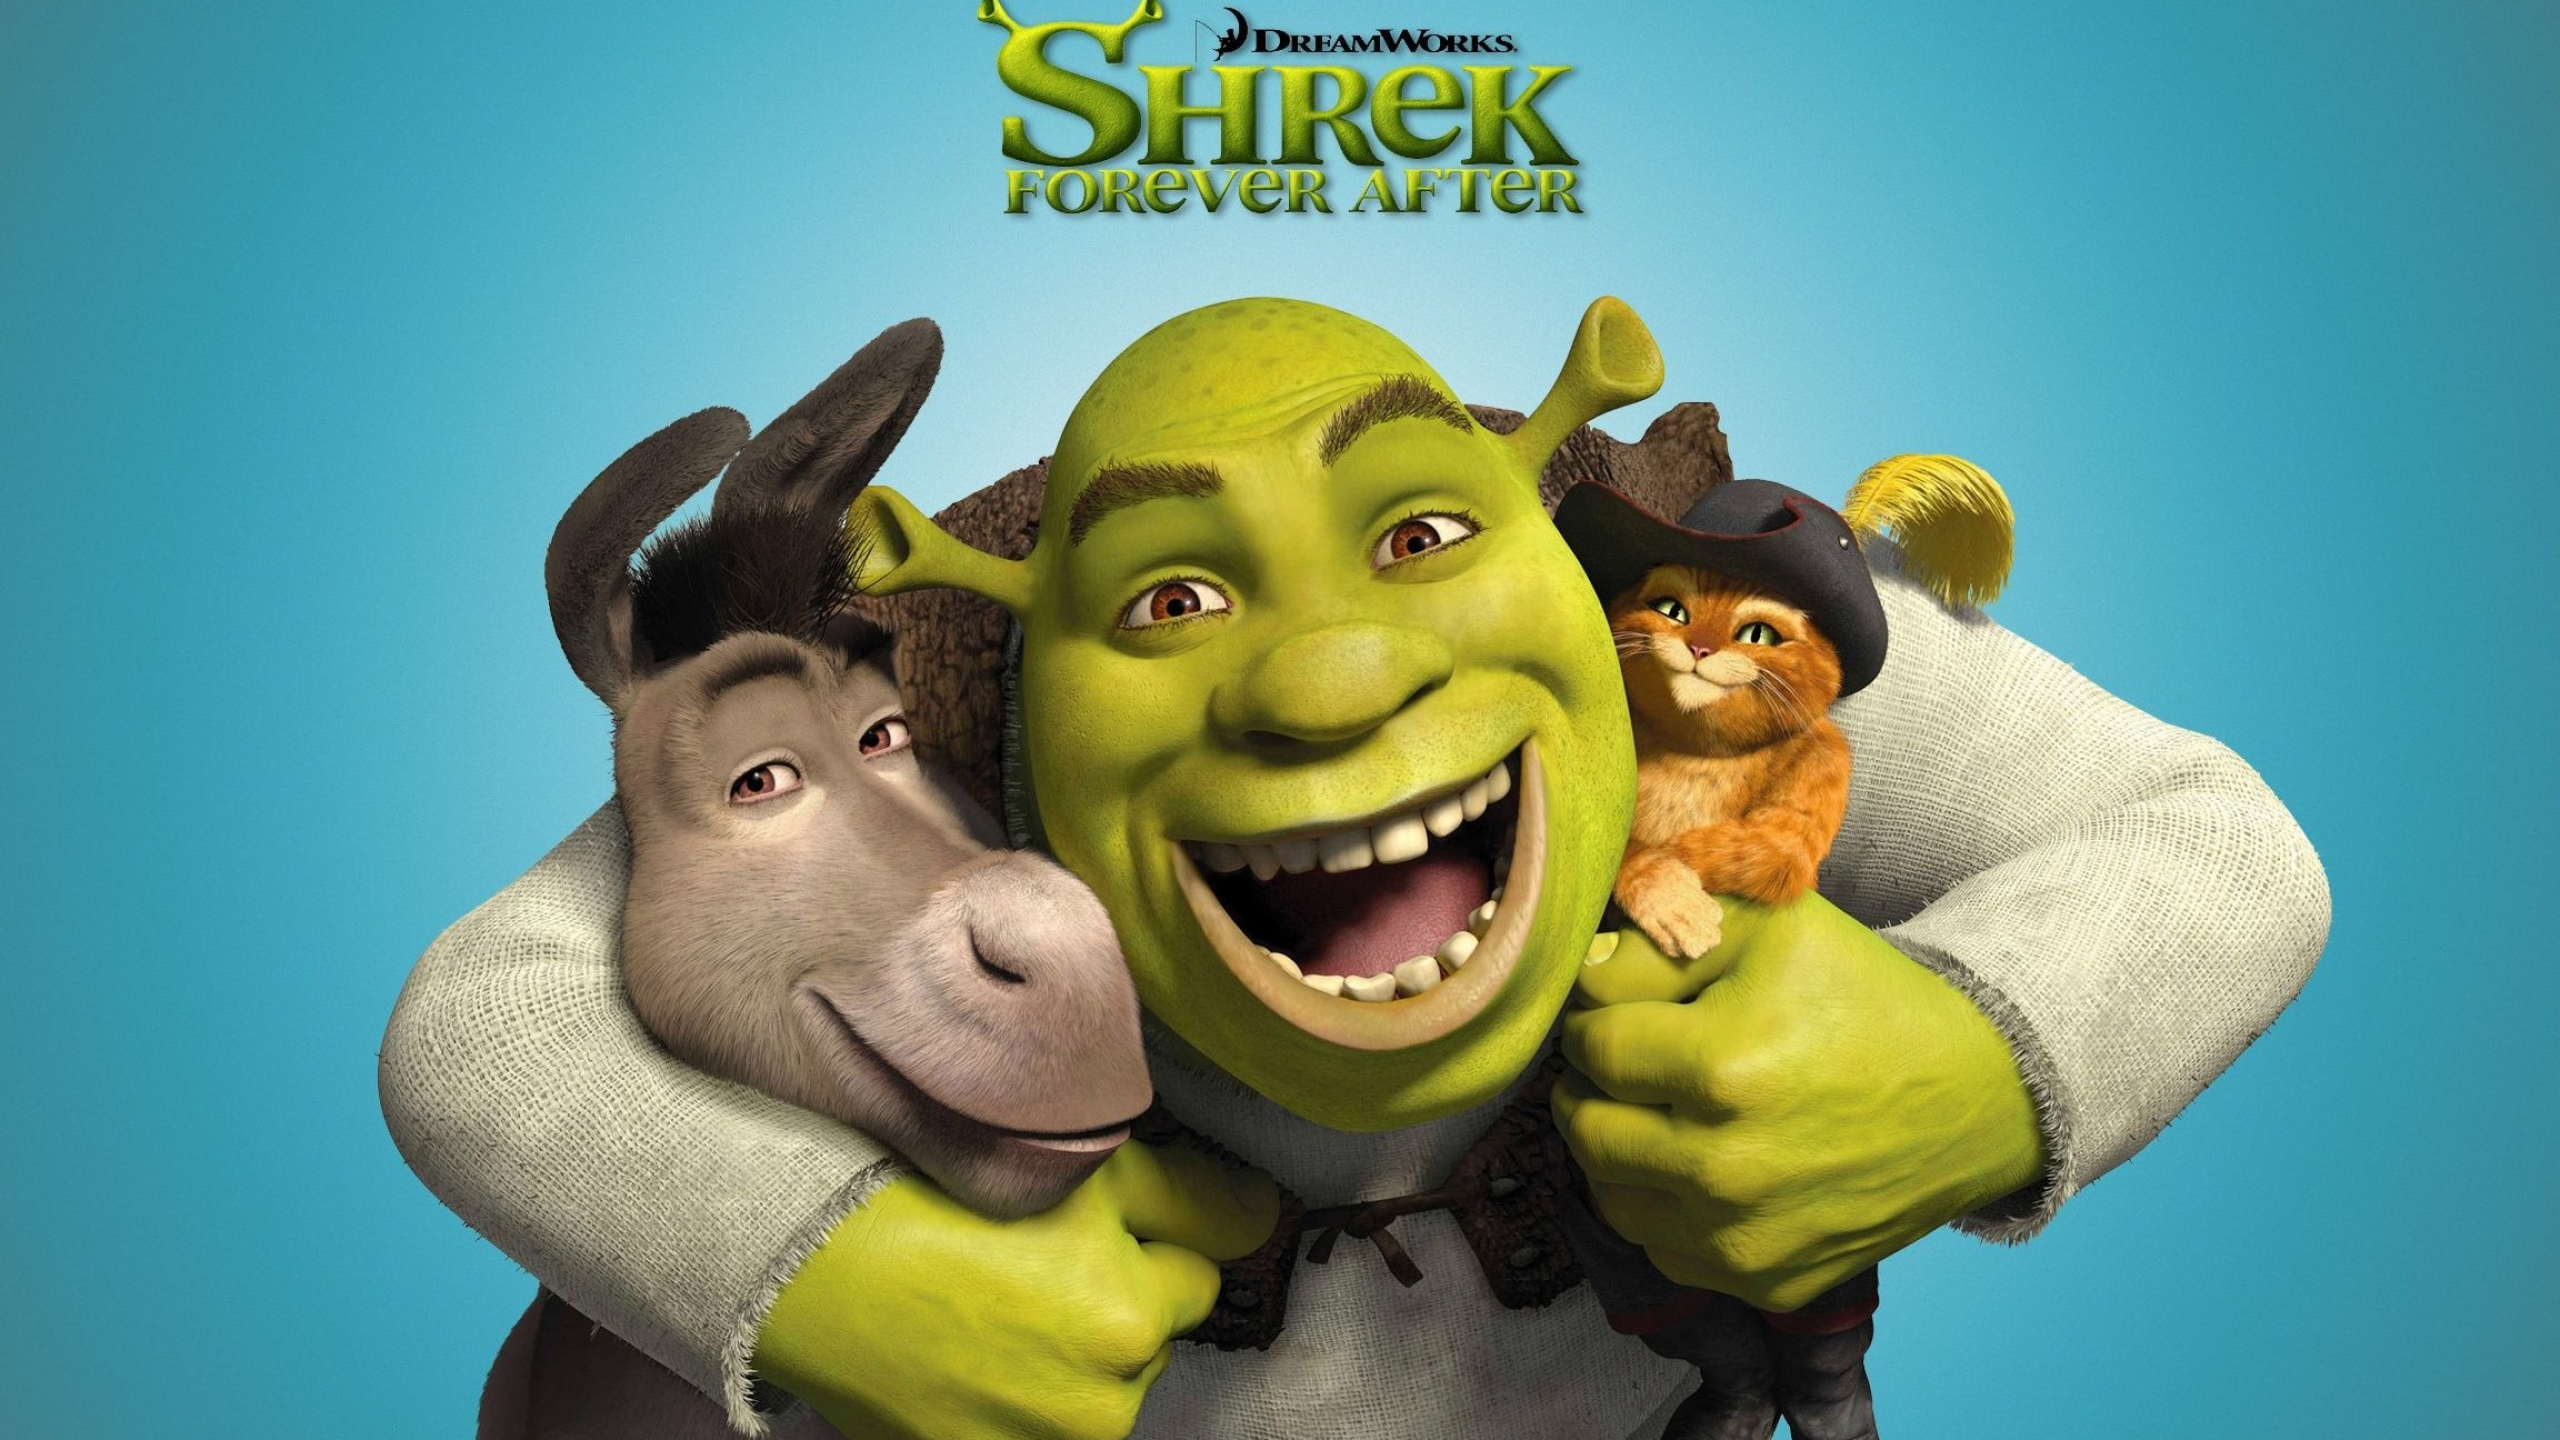 DreamWorks: Shrek, An American media franchise, Forever After. 2560x1440 HD Wallpaper.